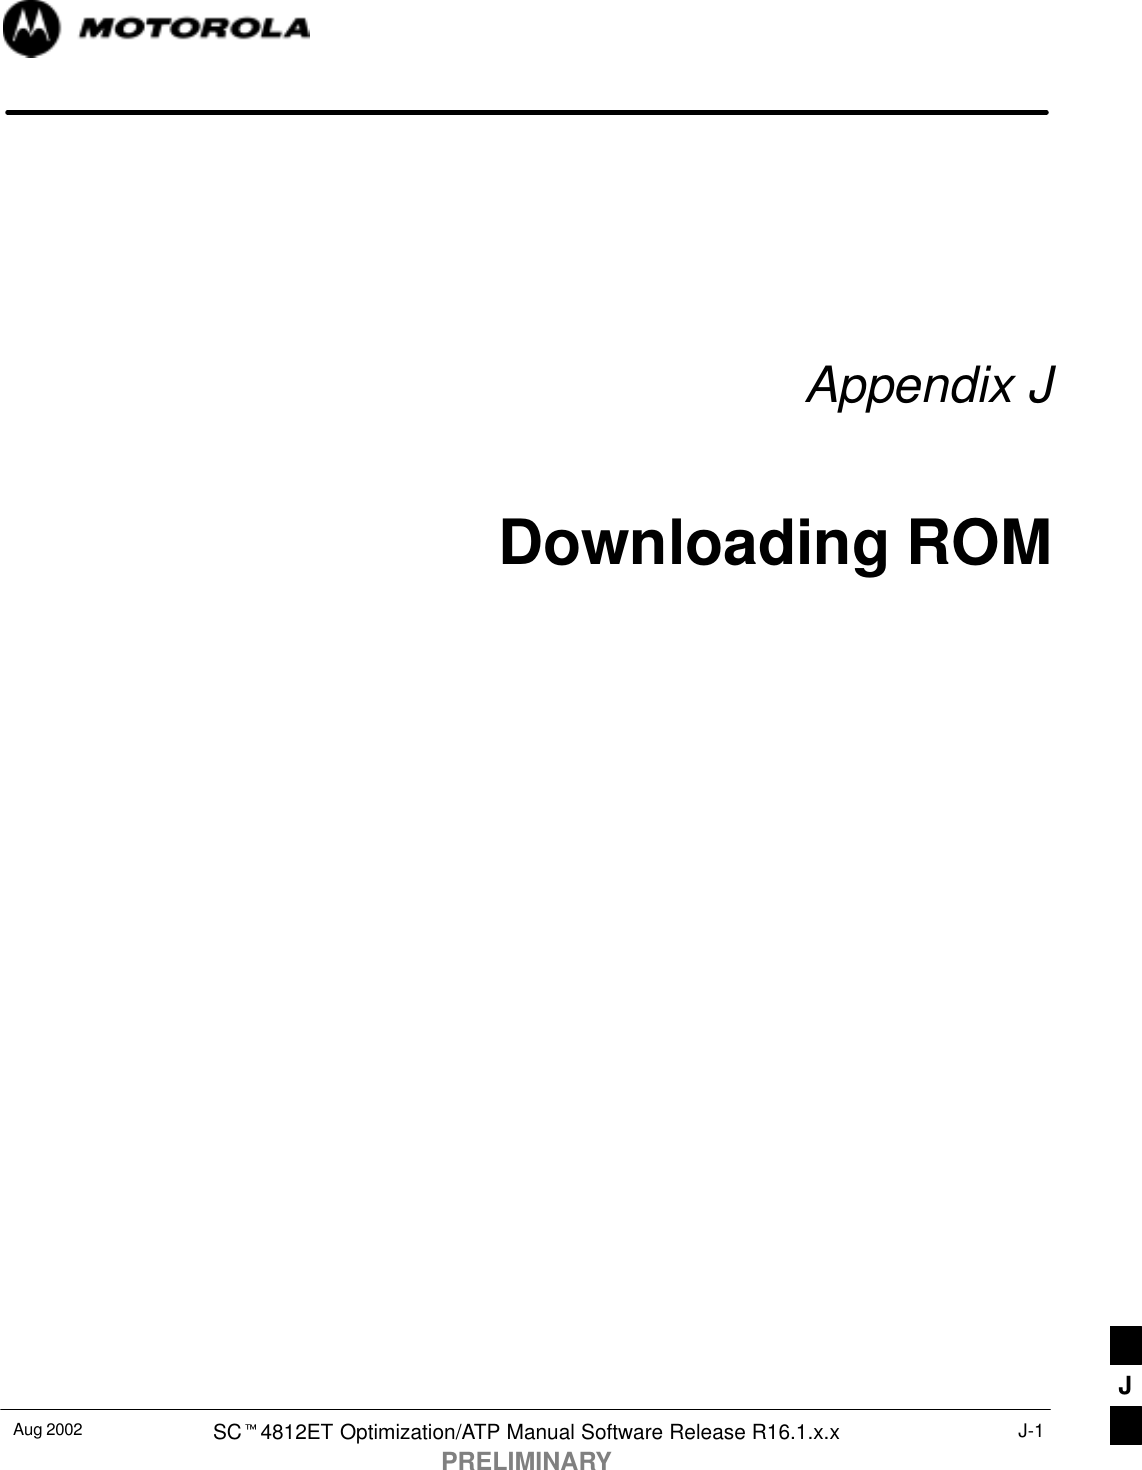 Aug 2002 SCt4812ET Optimization/ATP Manual Software Release R16.1.x.xPRELIMINARYJ-1Appendix JDownloading ROMJ